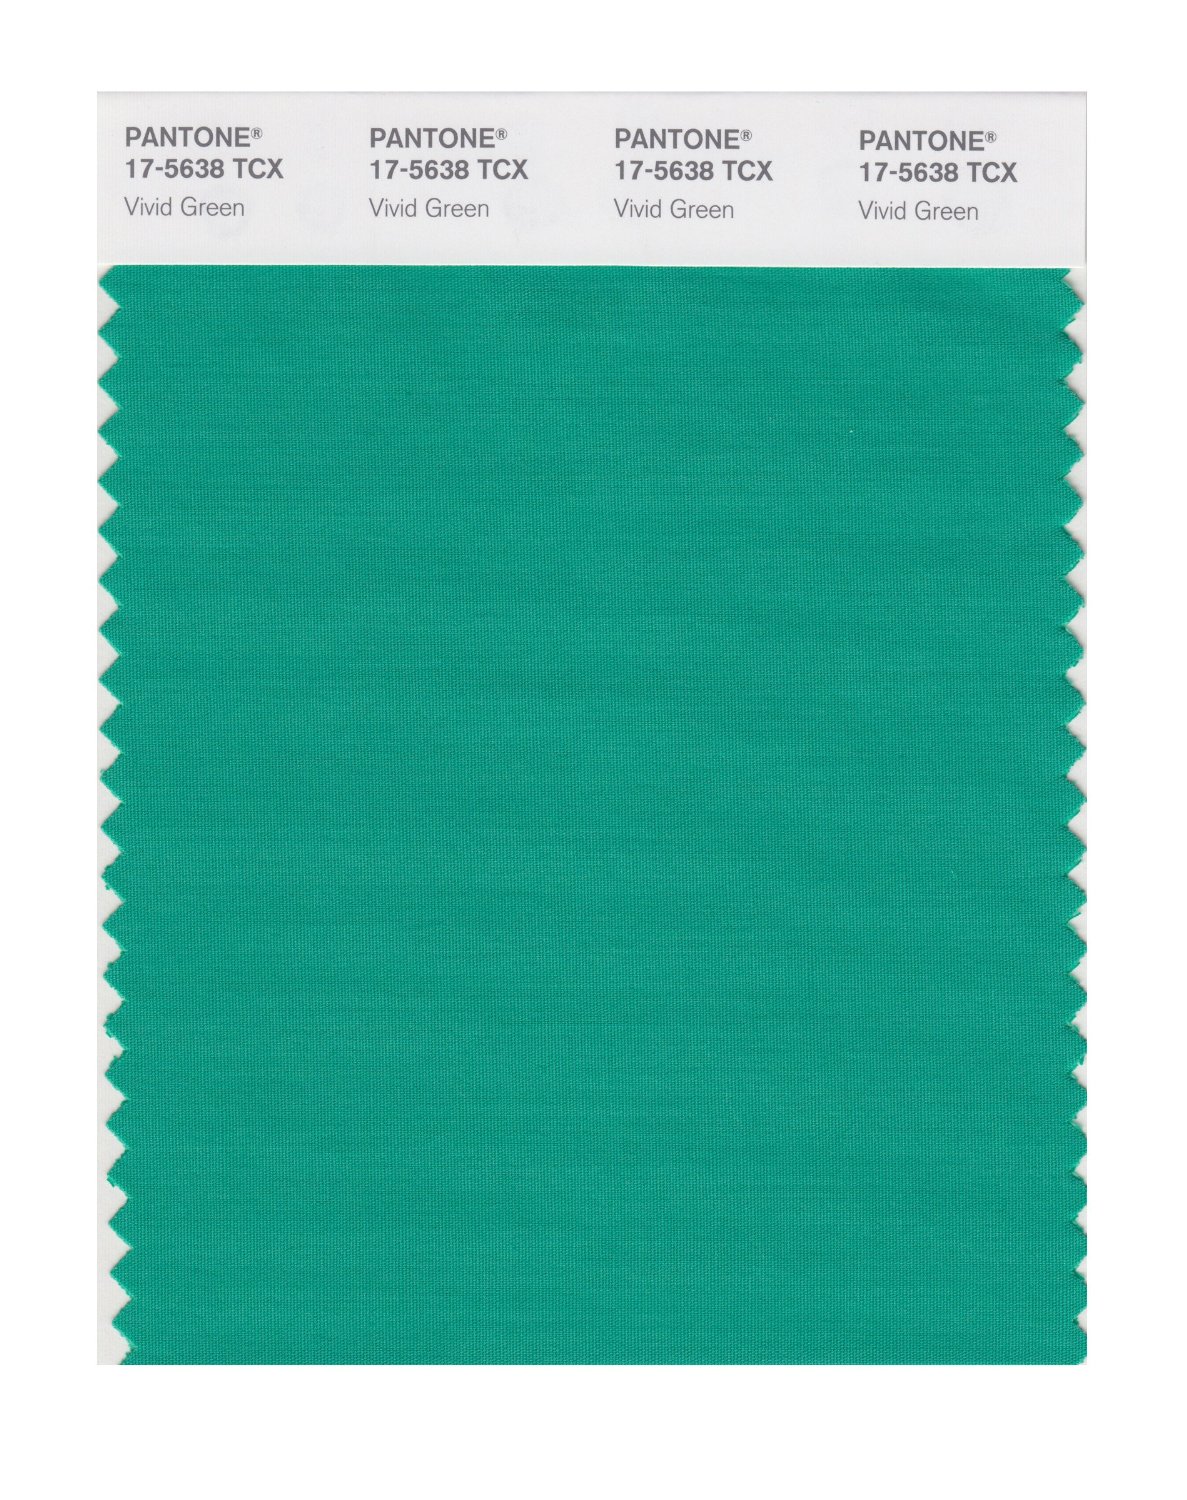 Pantone Cotton Swatch 17-5638 Vivid Green